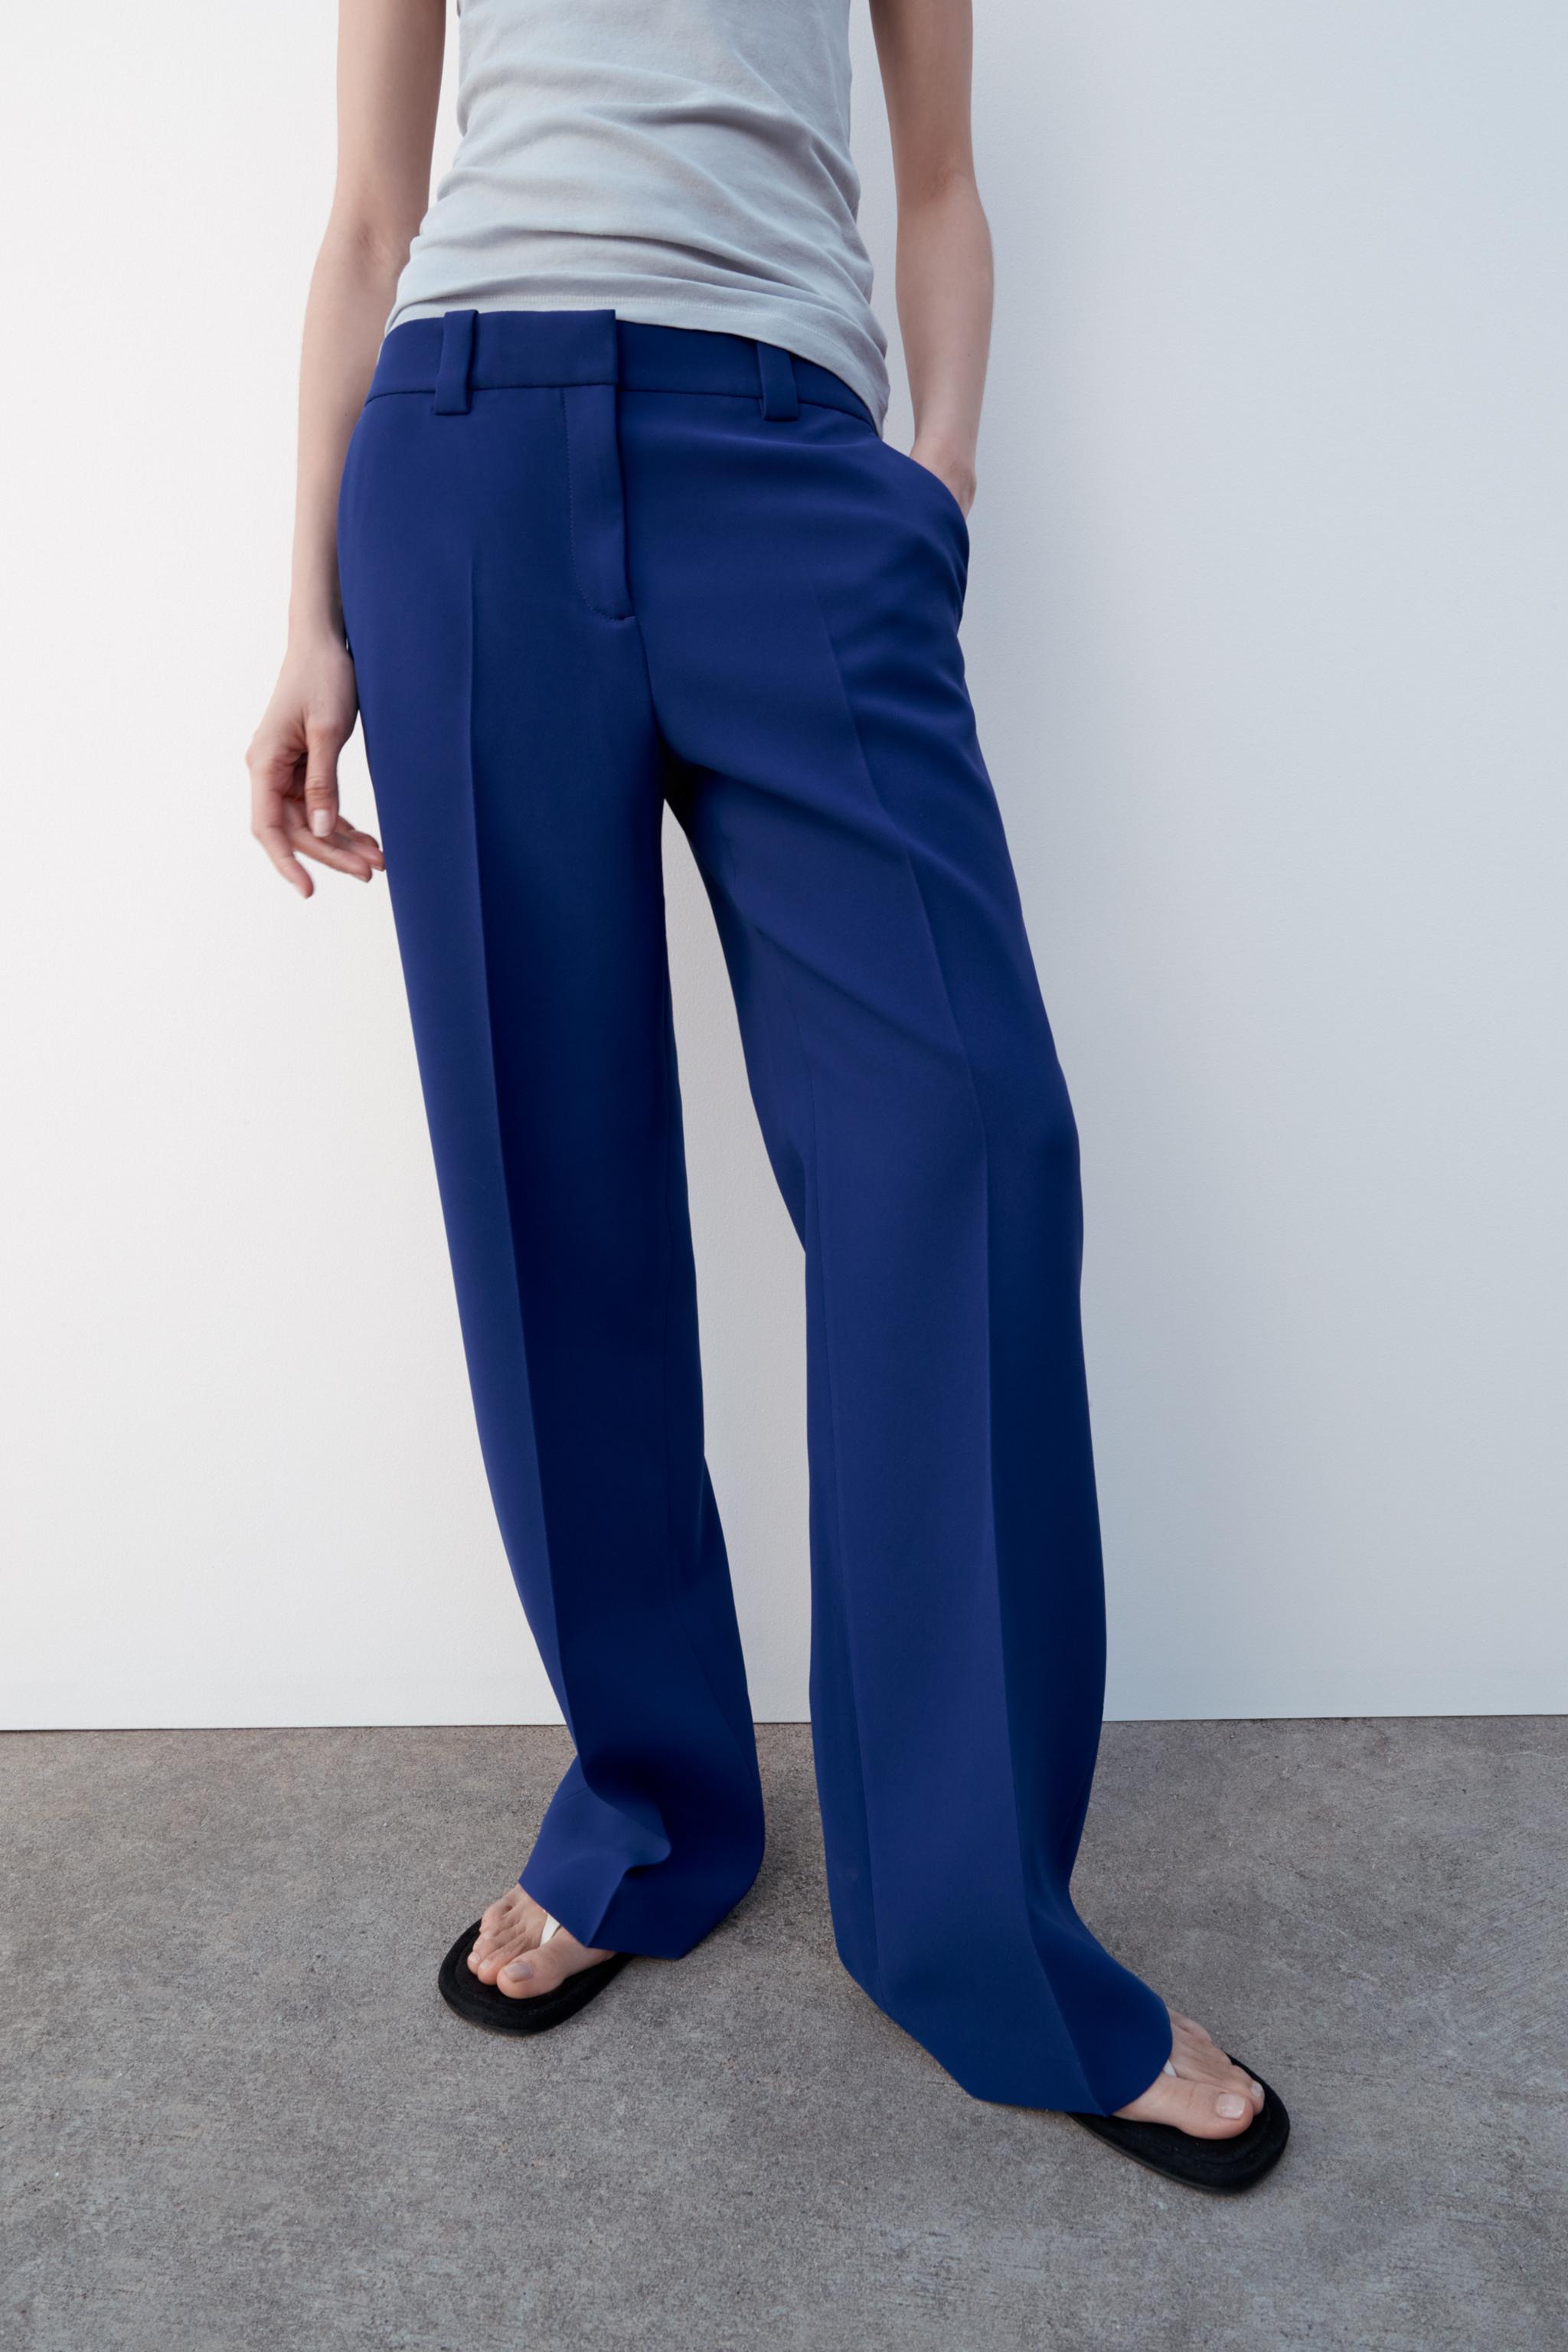 Zara Paisley Printed Flared Pants Size XS or M